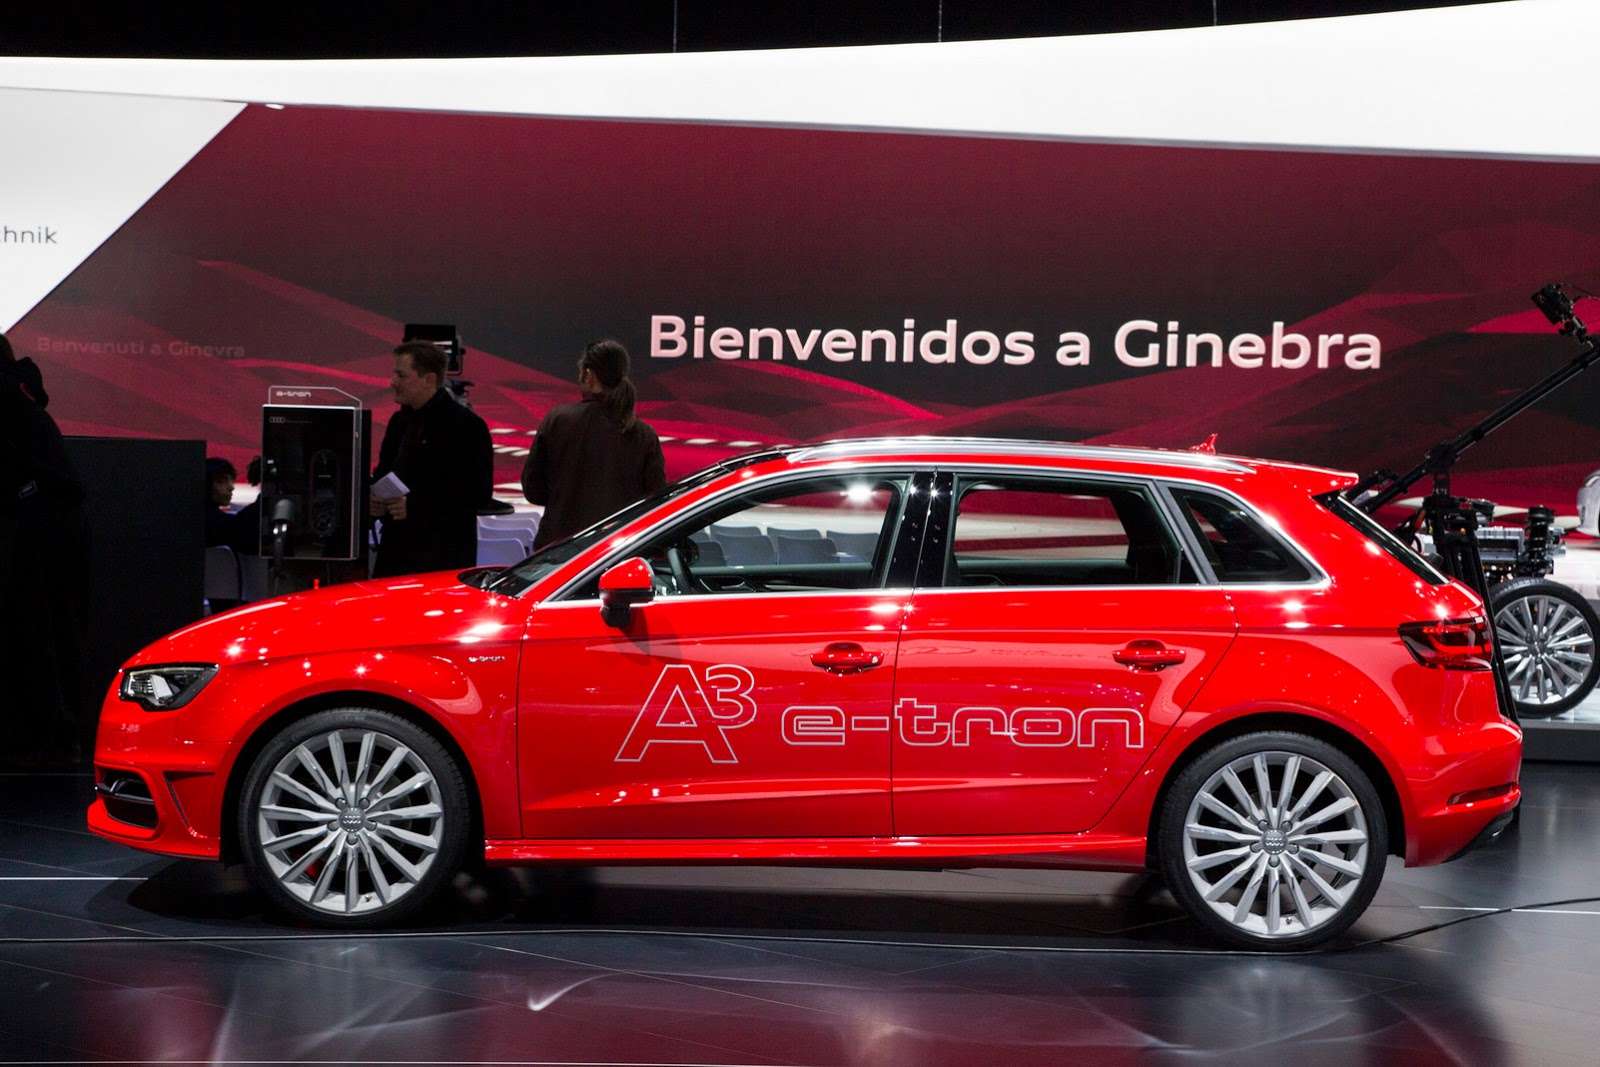 Audi a3 e-tron Geneva 2014